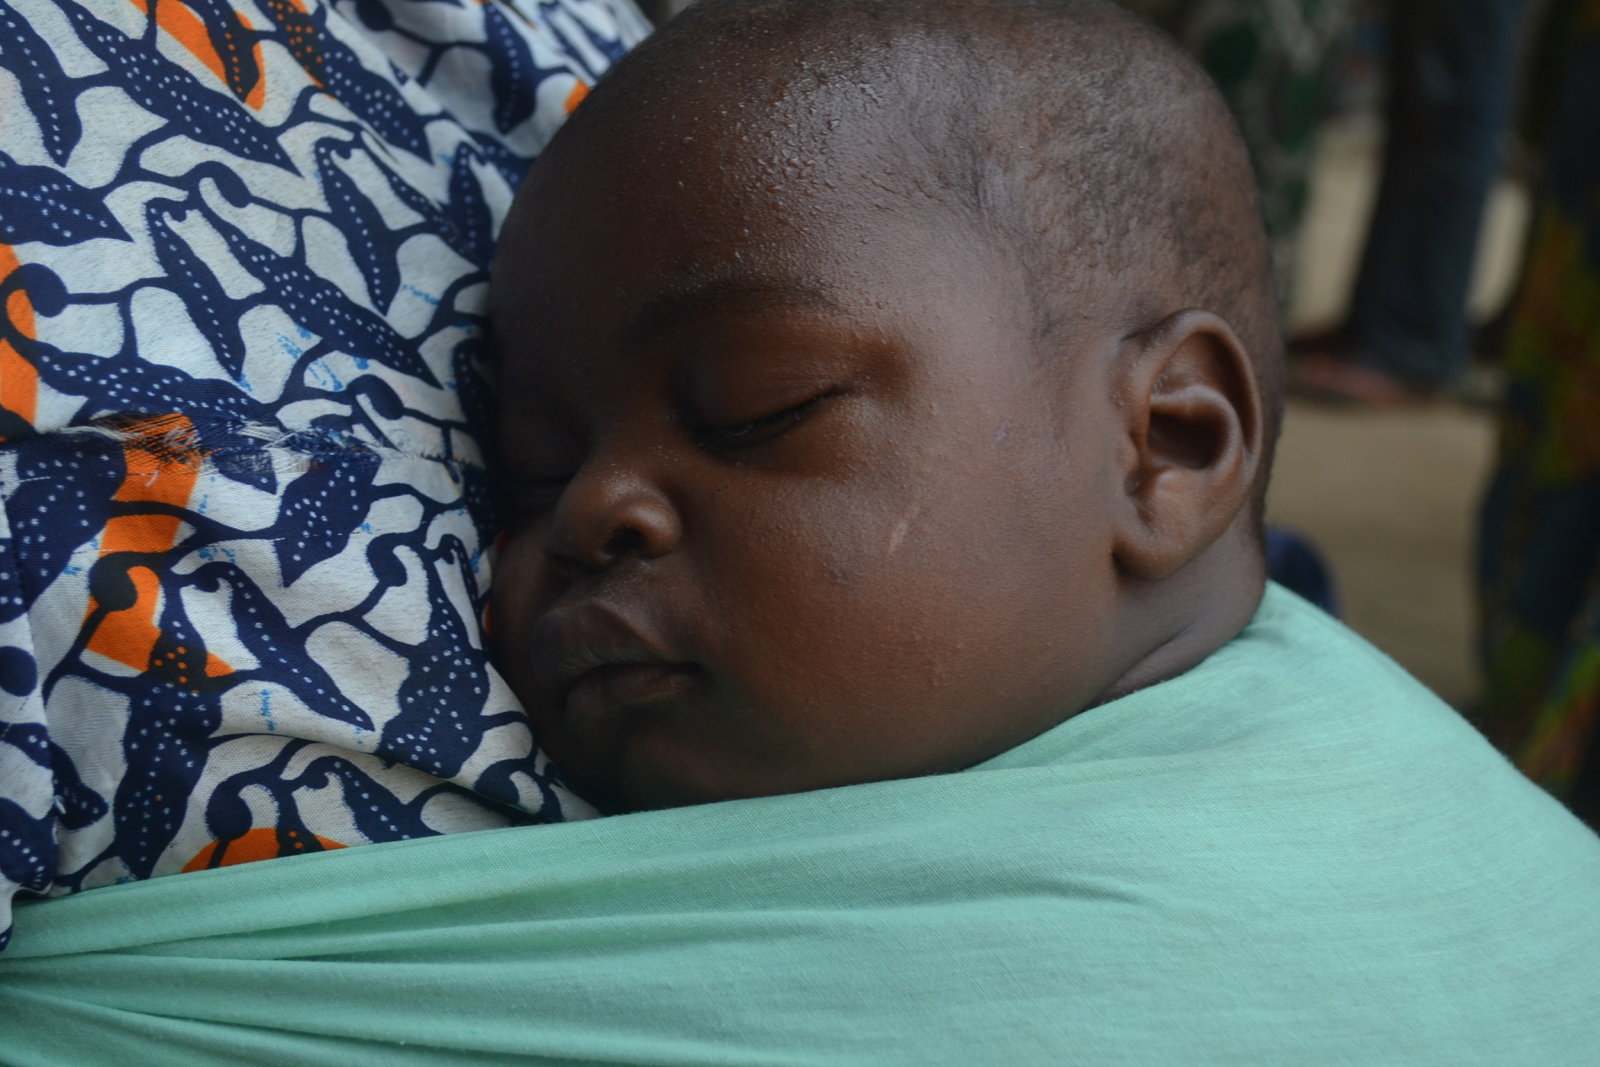 Child-sleeping-during-NIFs-distribution-Boferan-2014